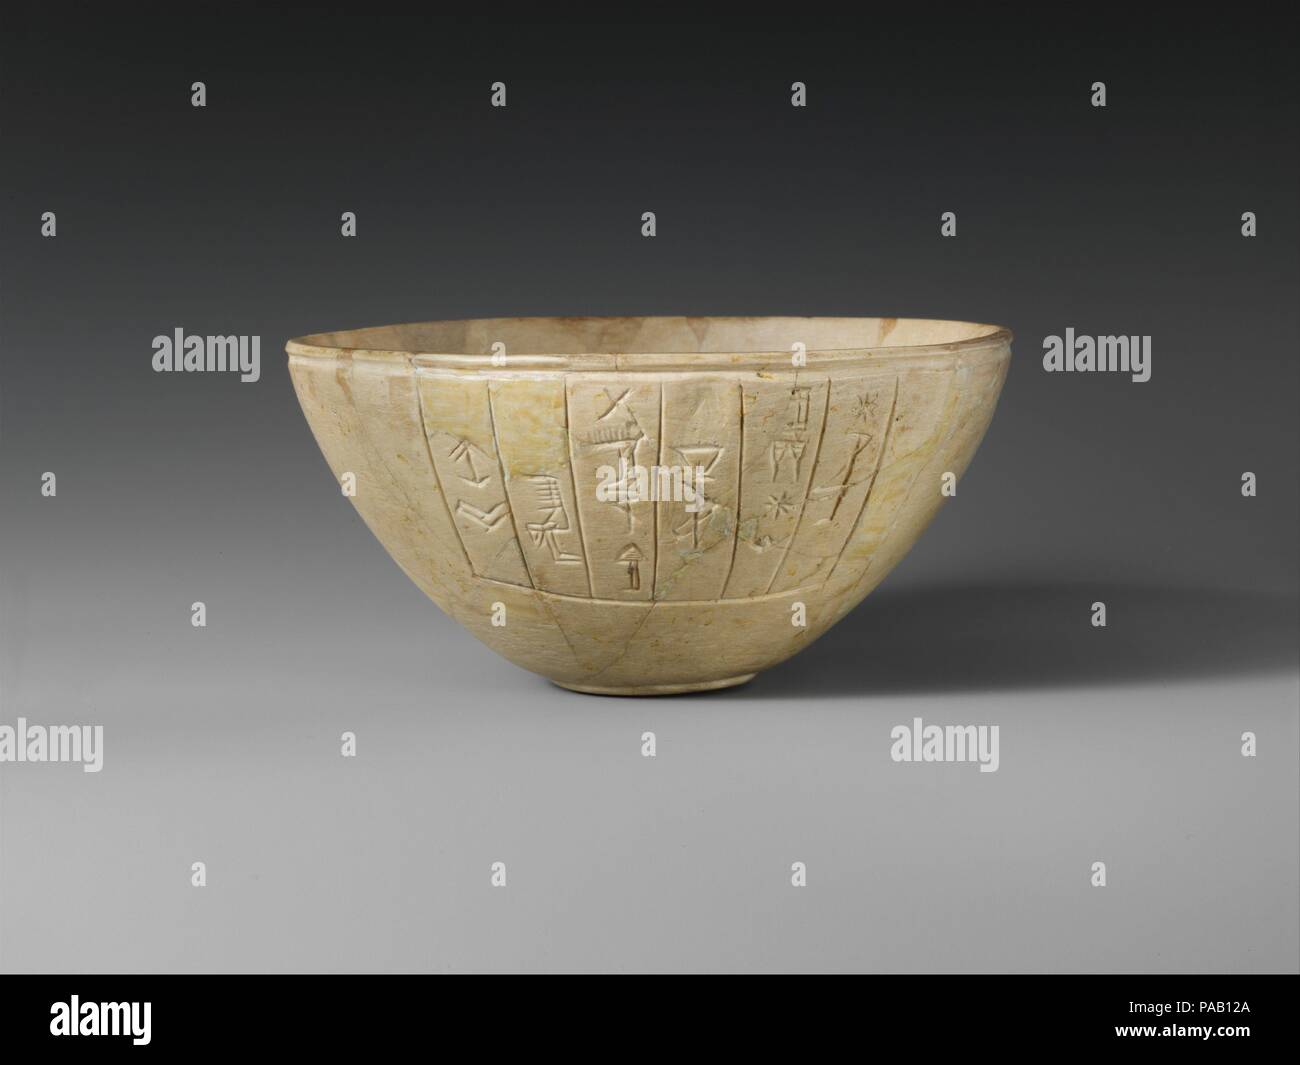 Votive bowl. Culture: Sumerian. Dimensions: H. 2 13/16 in. (7.1 cm). Date: ca. 2600-2350 B.C.. Museum: Metropolitan Museum of Art, New York, USA. Stock Photo